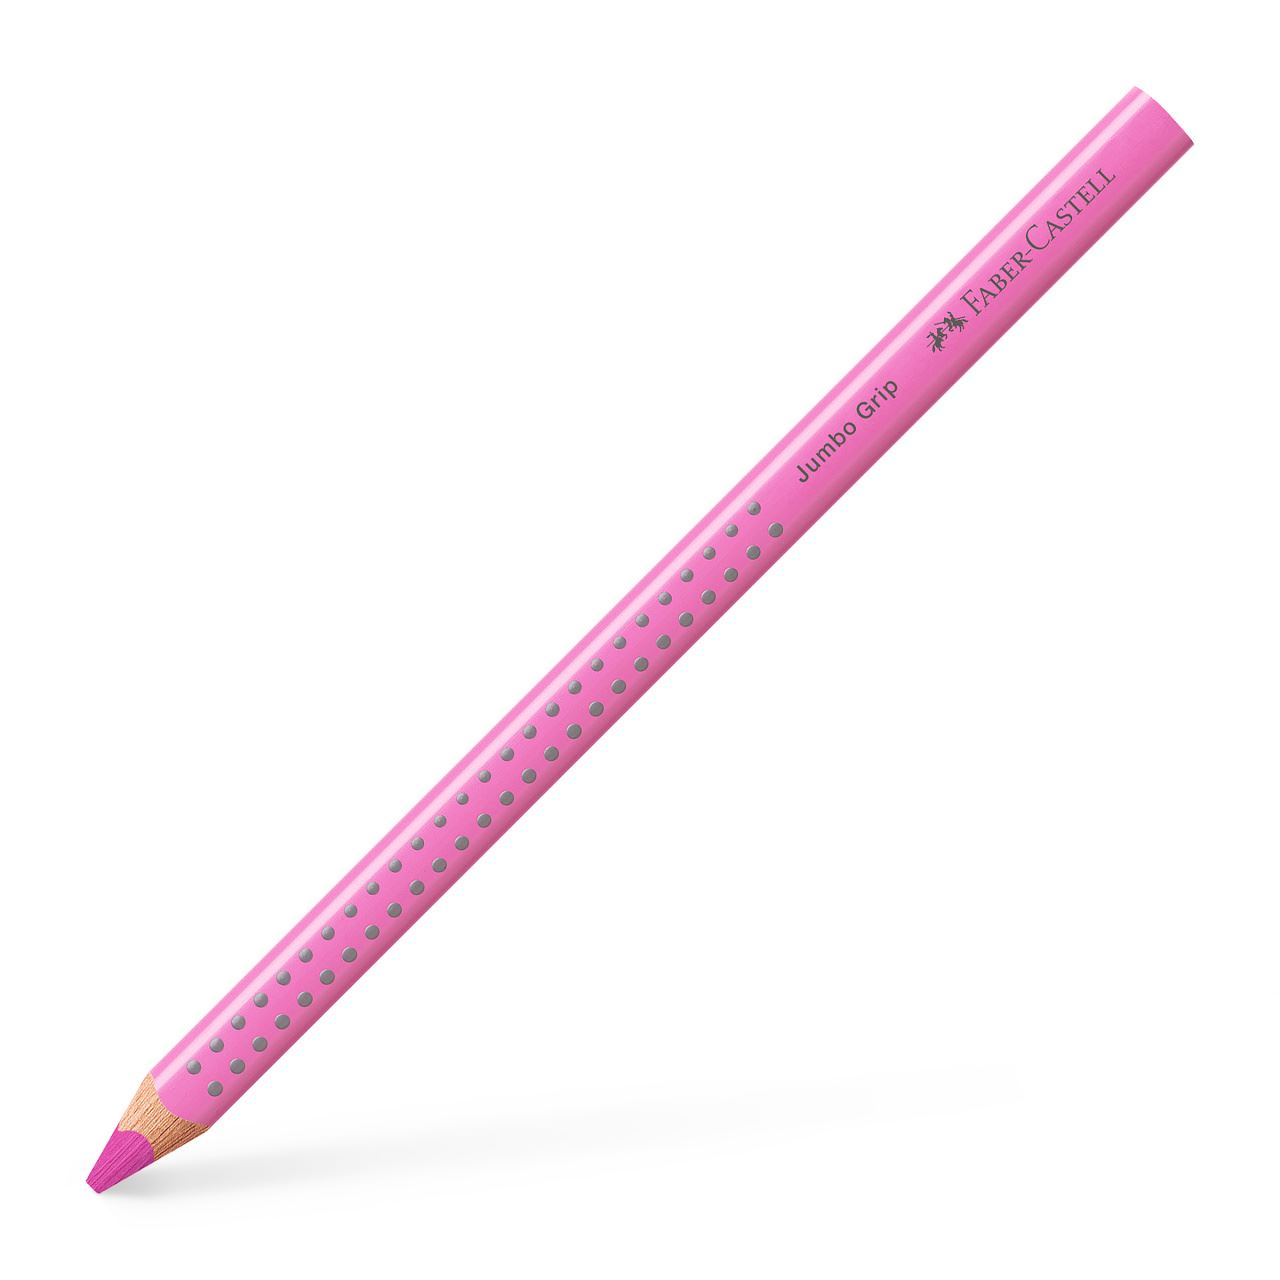 Faber-Castell - Ξυλομπογιά Grip σε jumbo μέγεθος, χρώμα ροζ